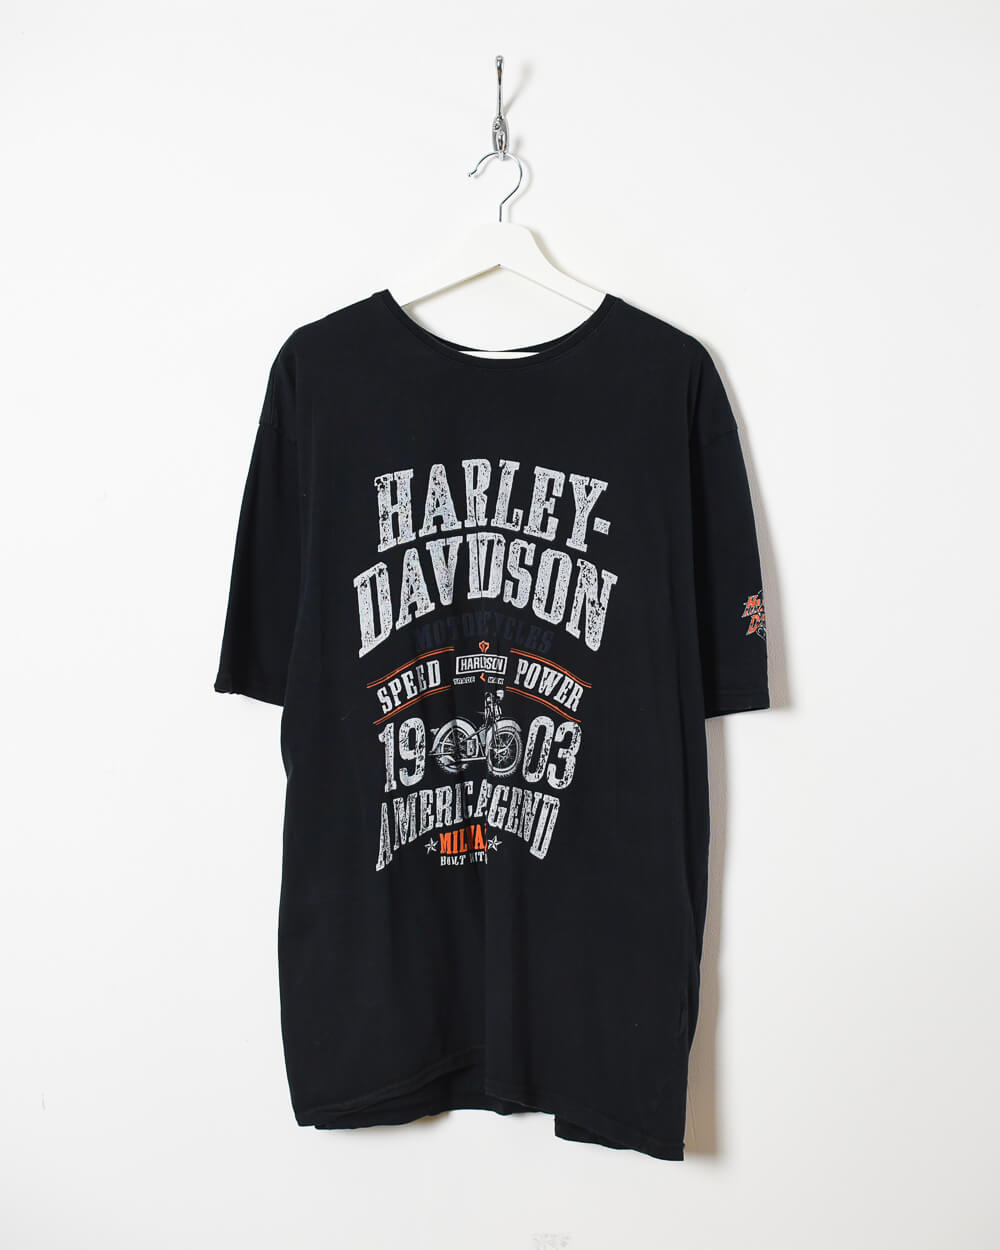 Black Harley Davidson Motorcycles American Legend 1903 T-Shirt - XX-Large